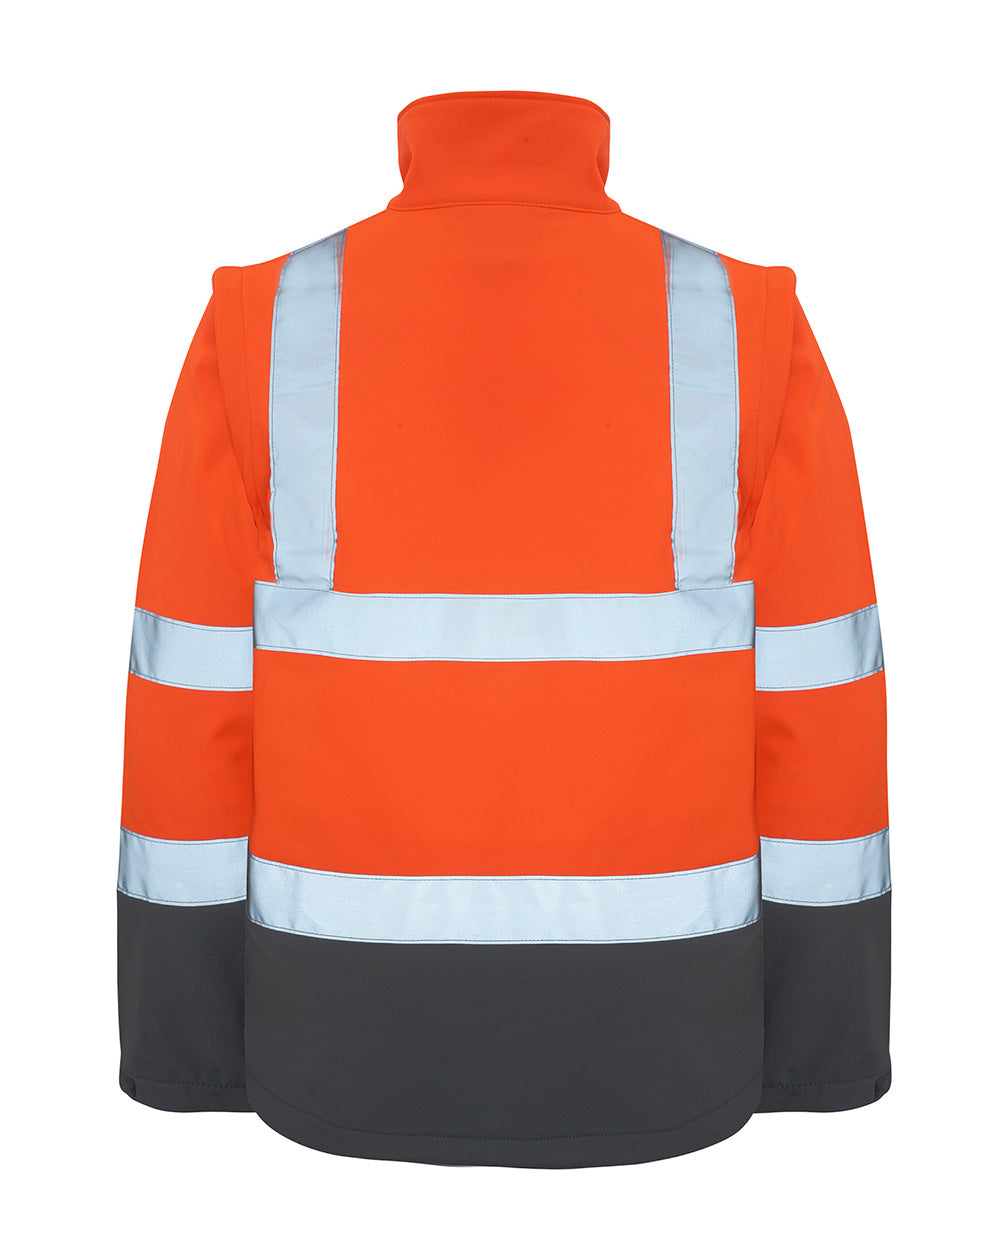 Landy Softshell Jacket in Fluoro Orange & Charcoal